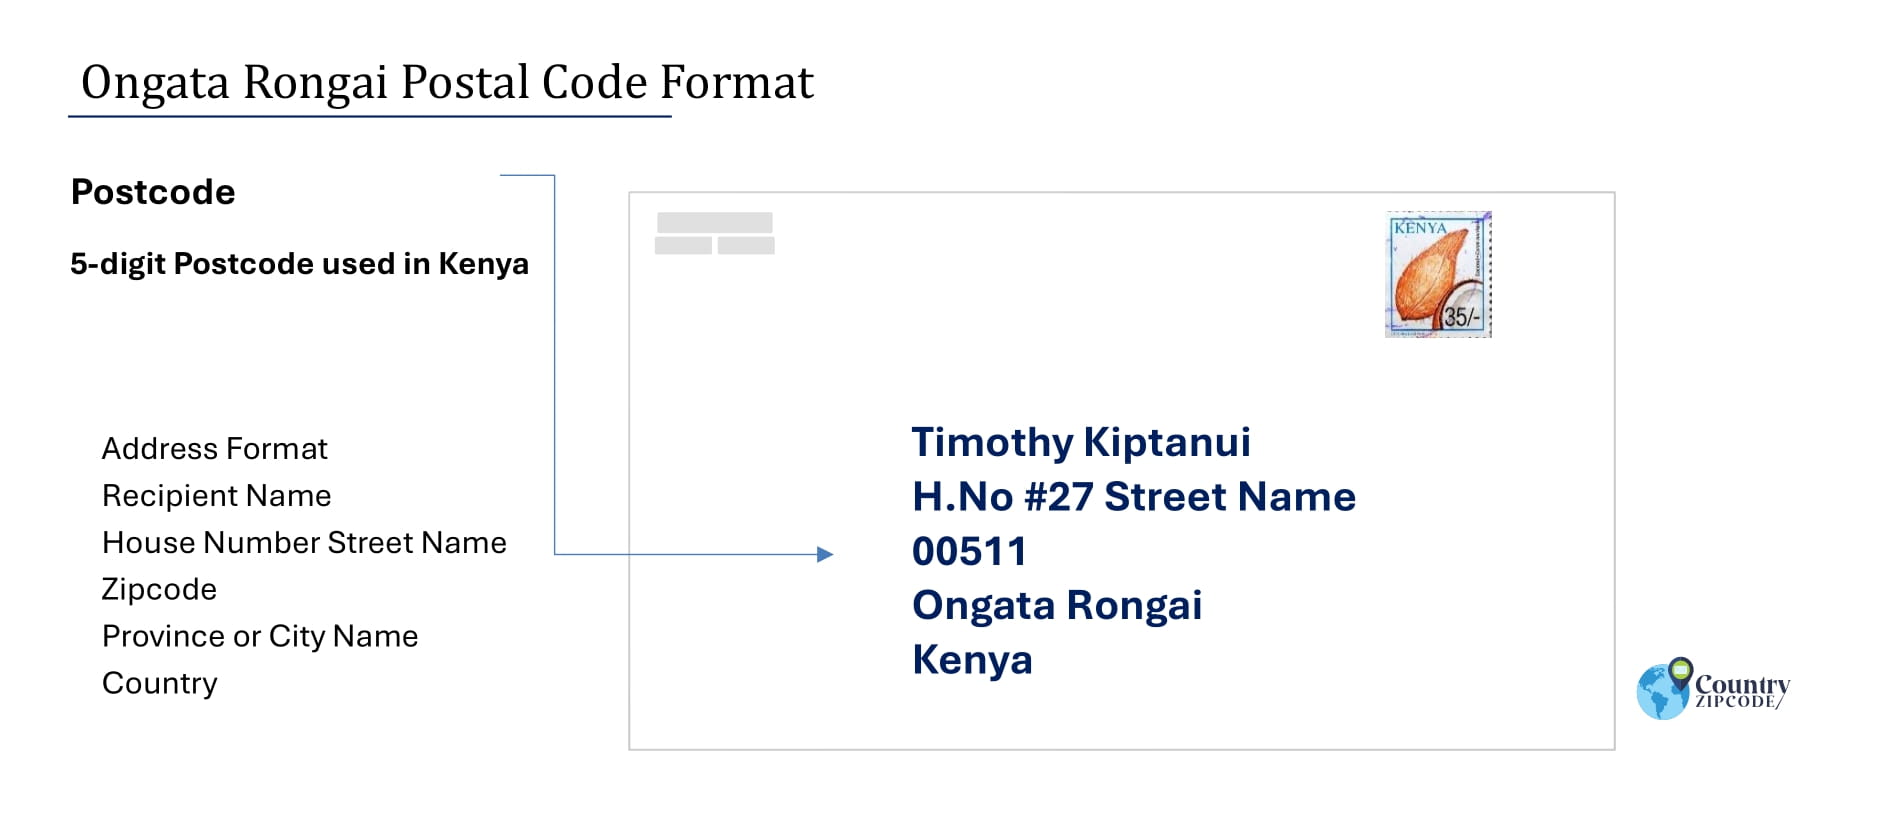 Example of Ongata Rongai Address and postal code format